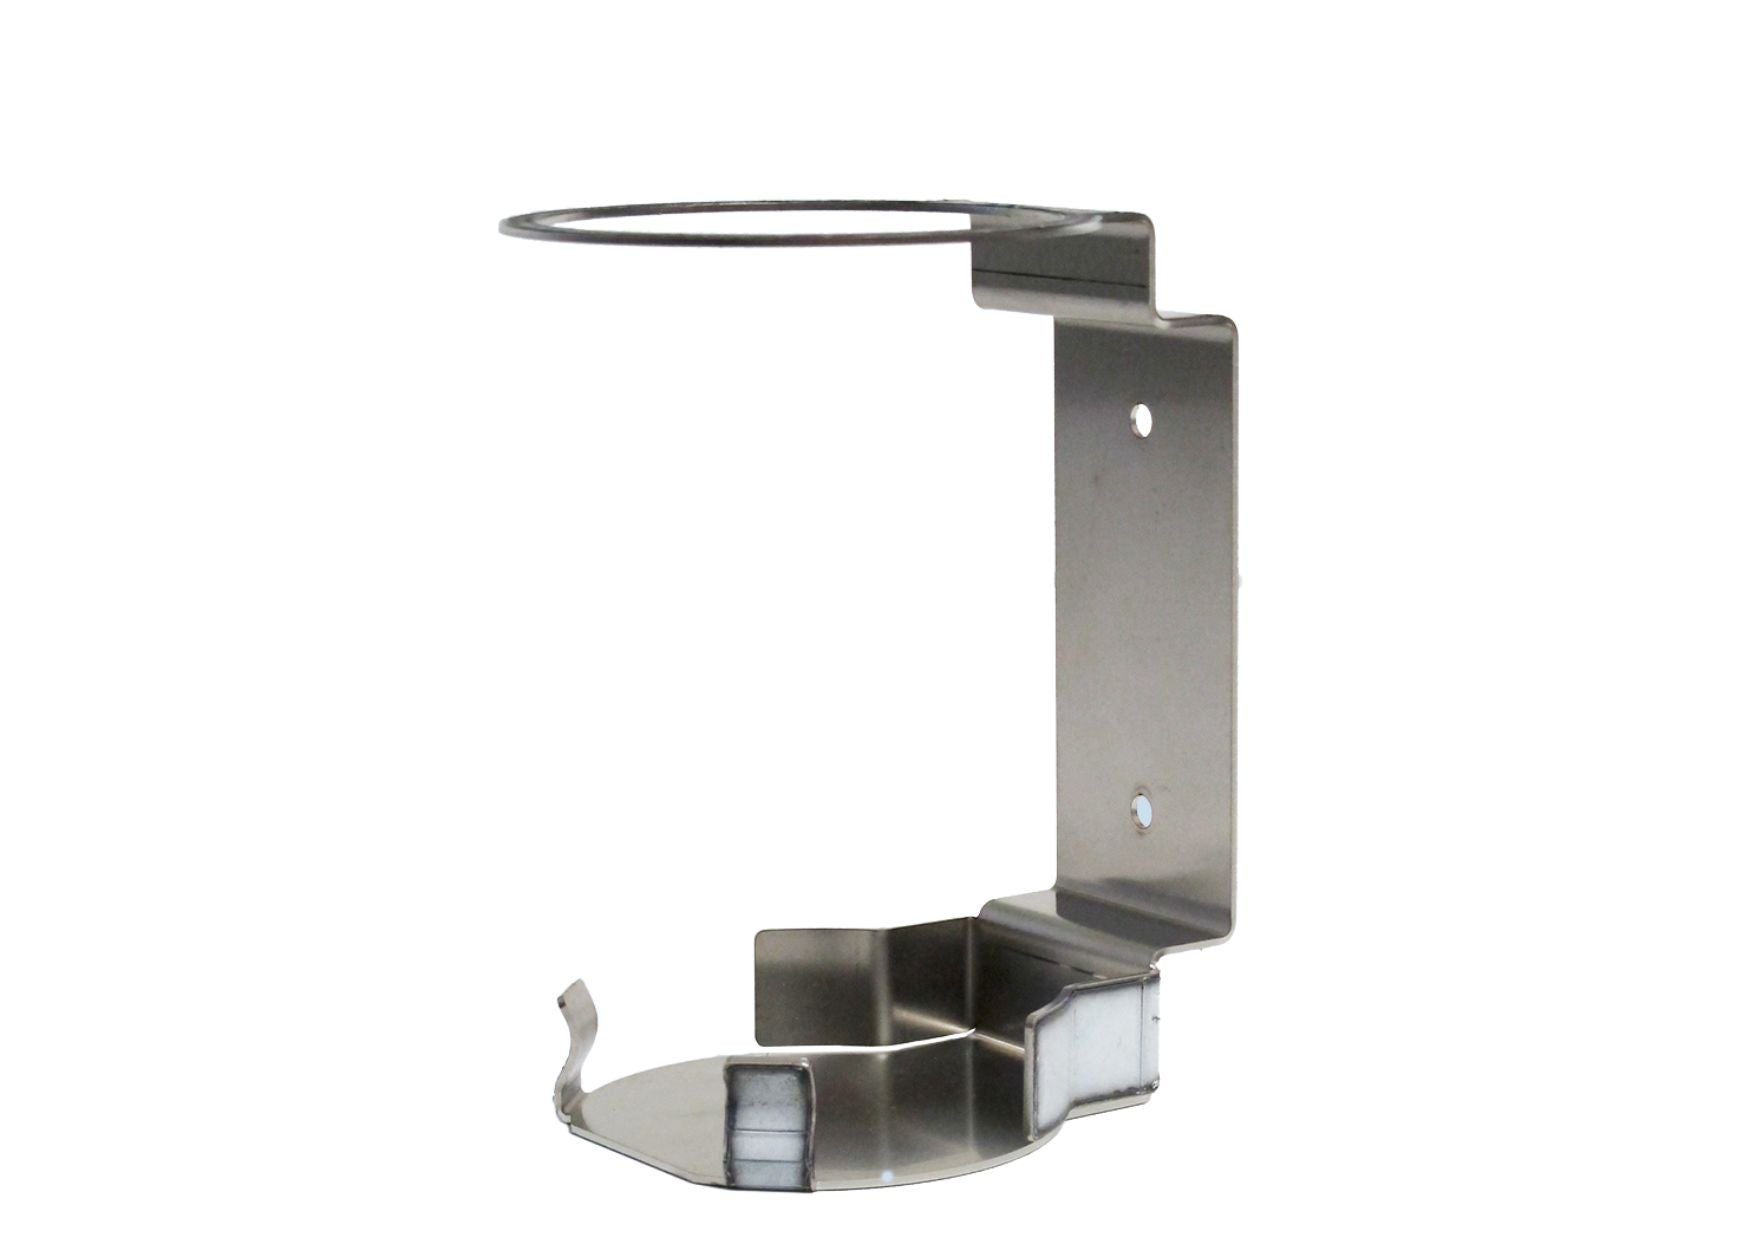 Stainless steel wall holder for disinfectant wipes dispenser